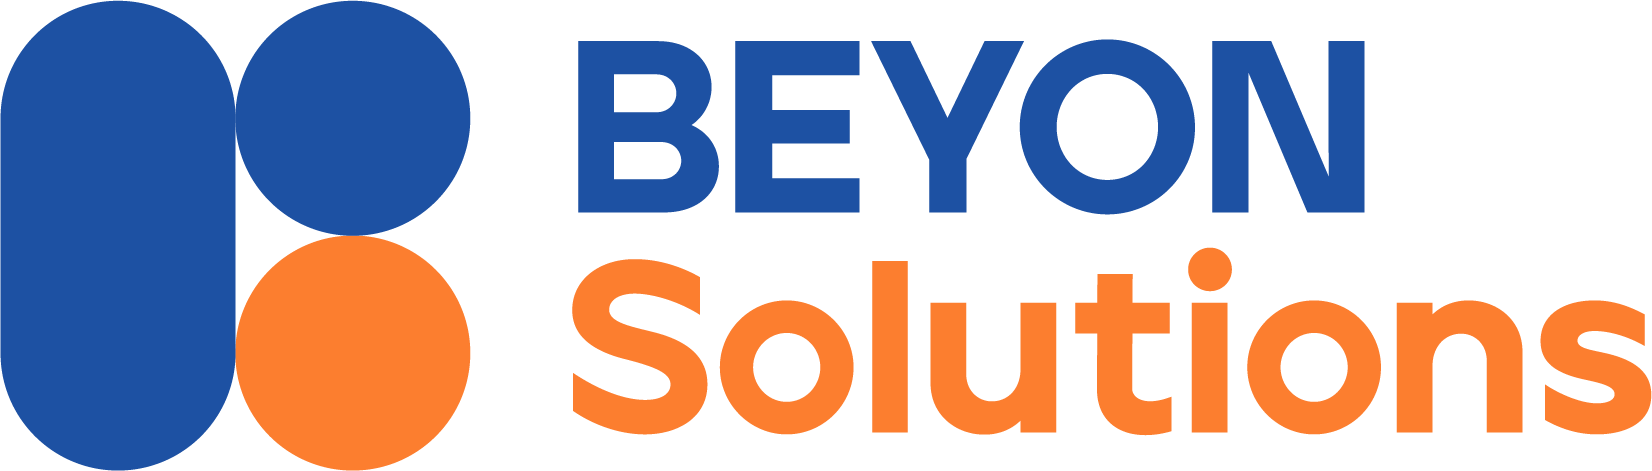 Beyon Solutions